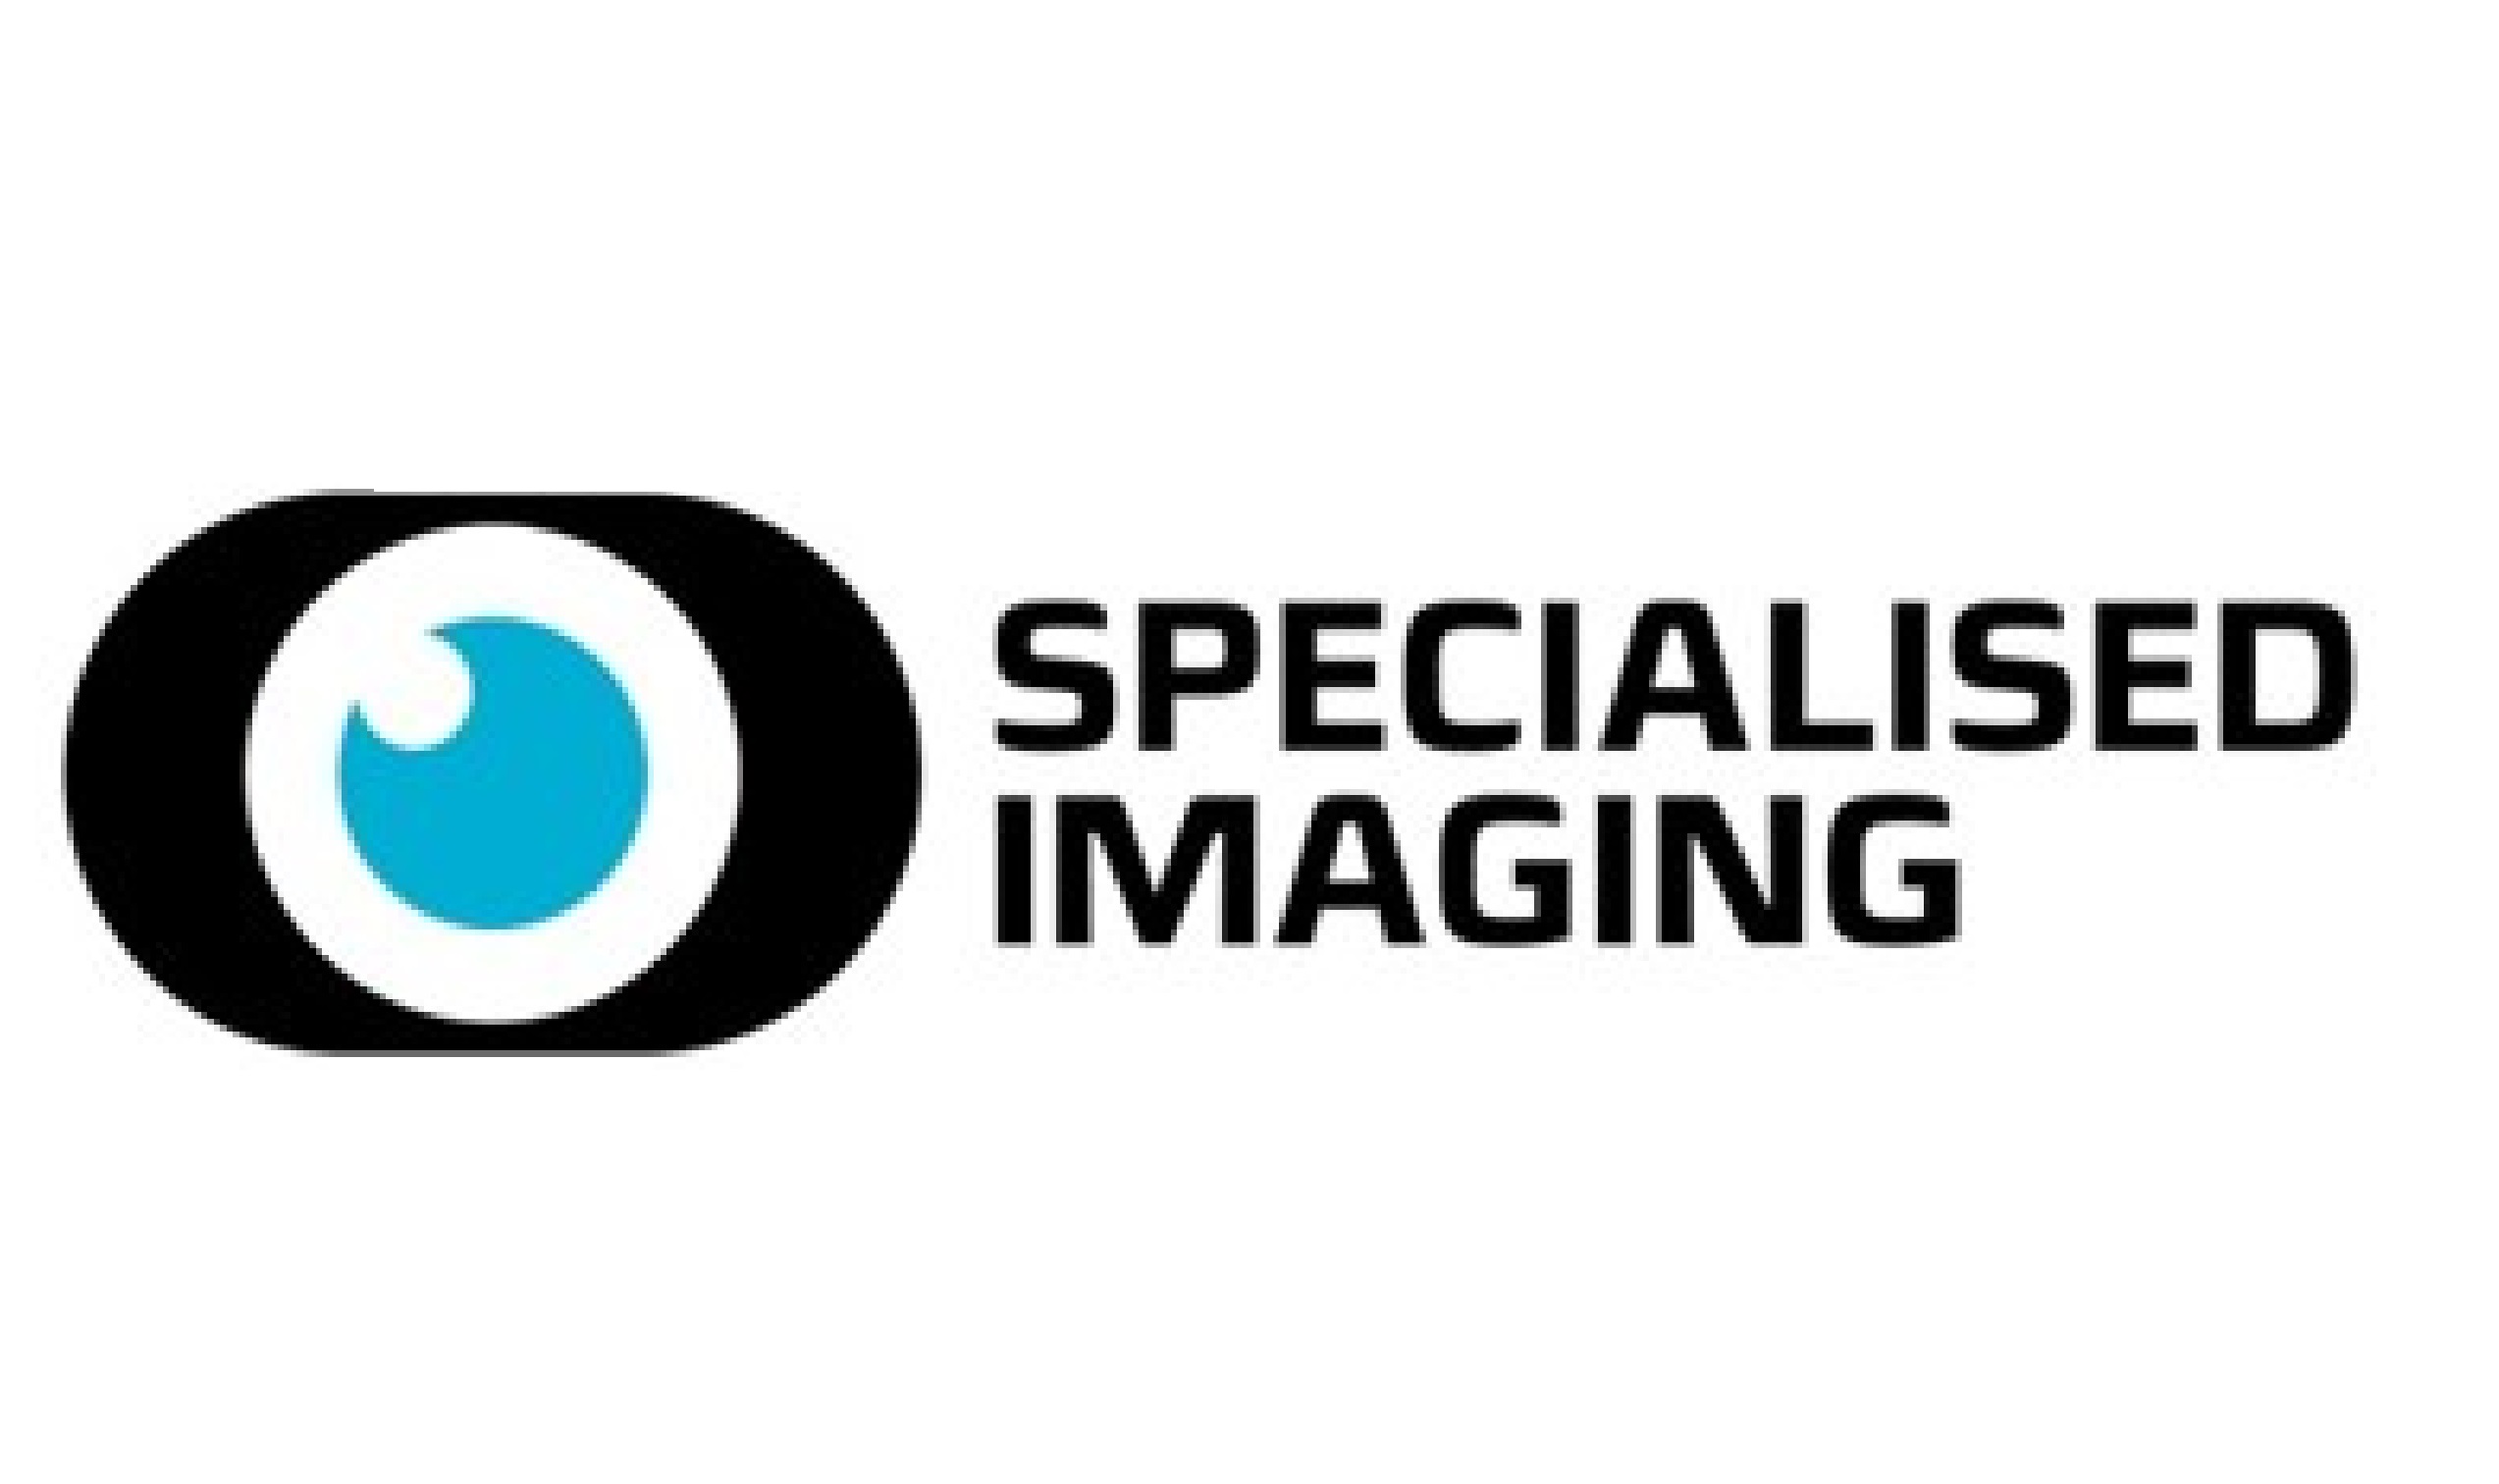 ILASS 2018 Chicago Exhibitor Specialised Imaging